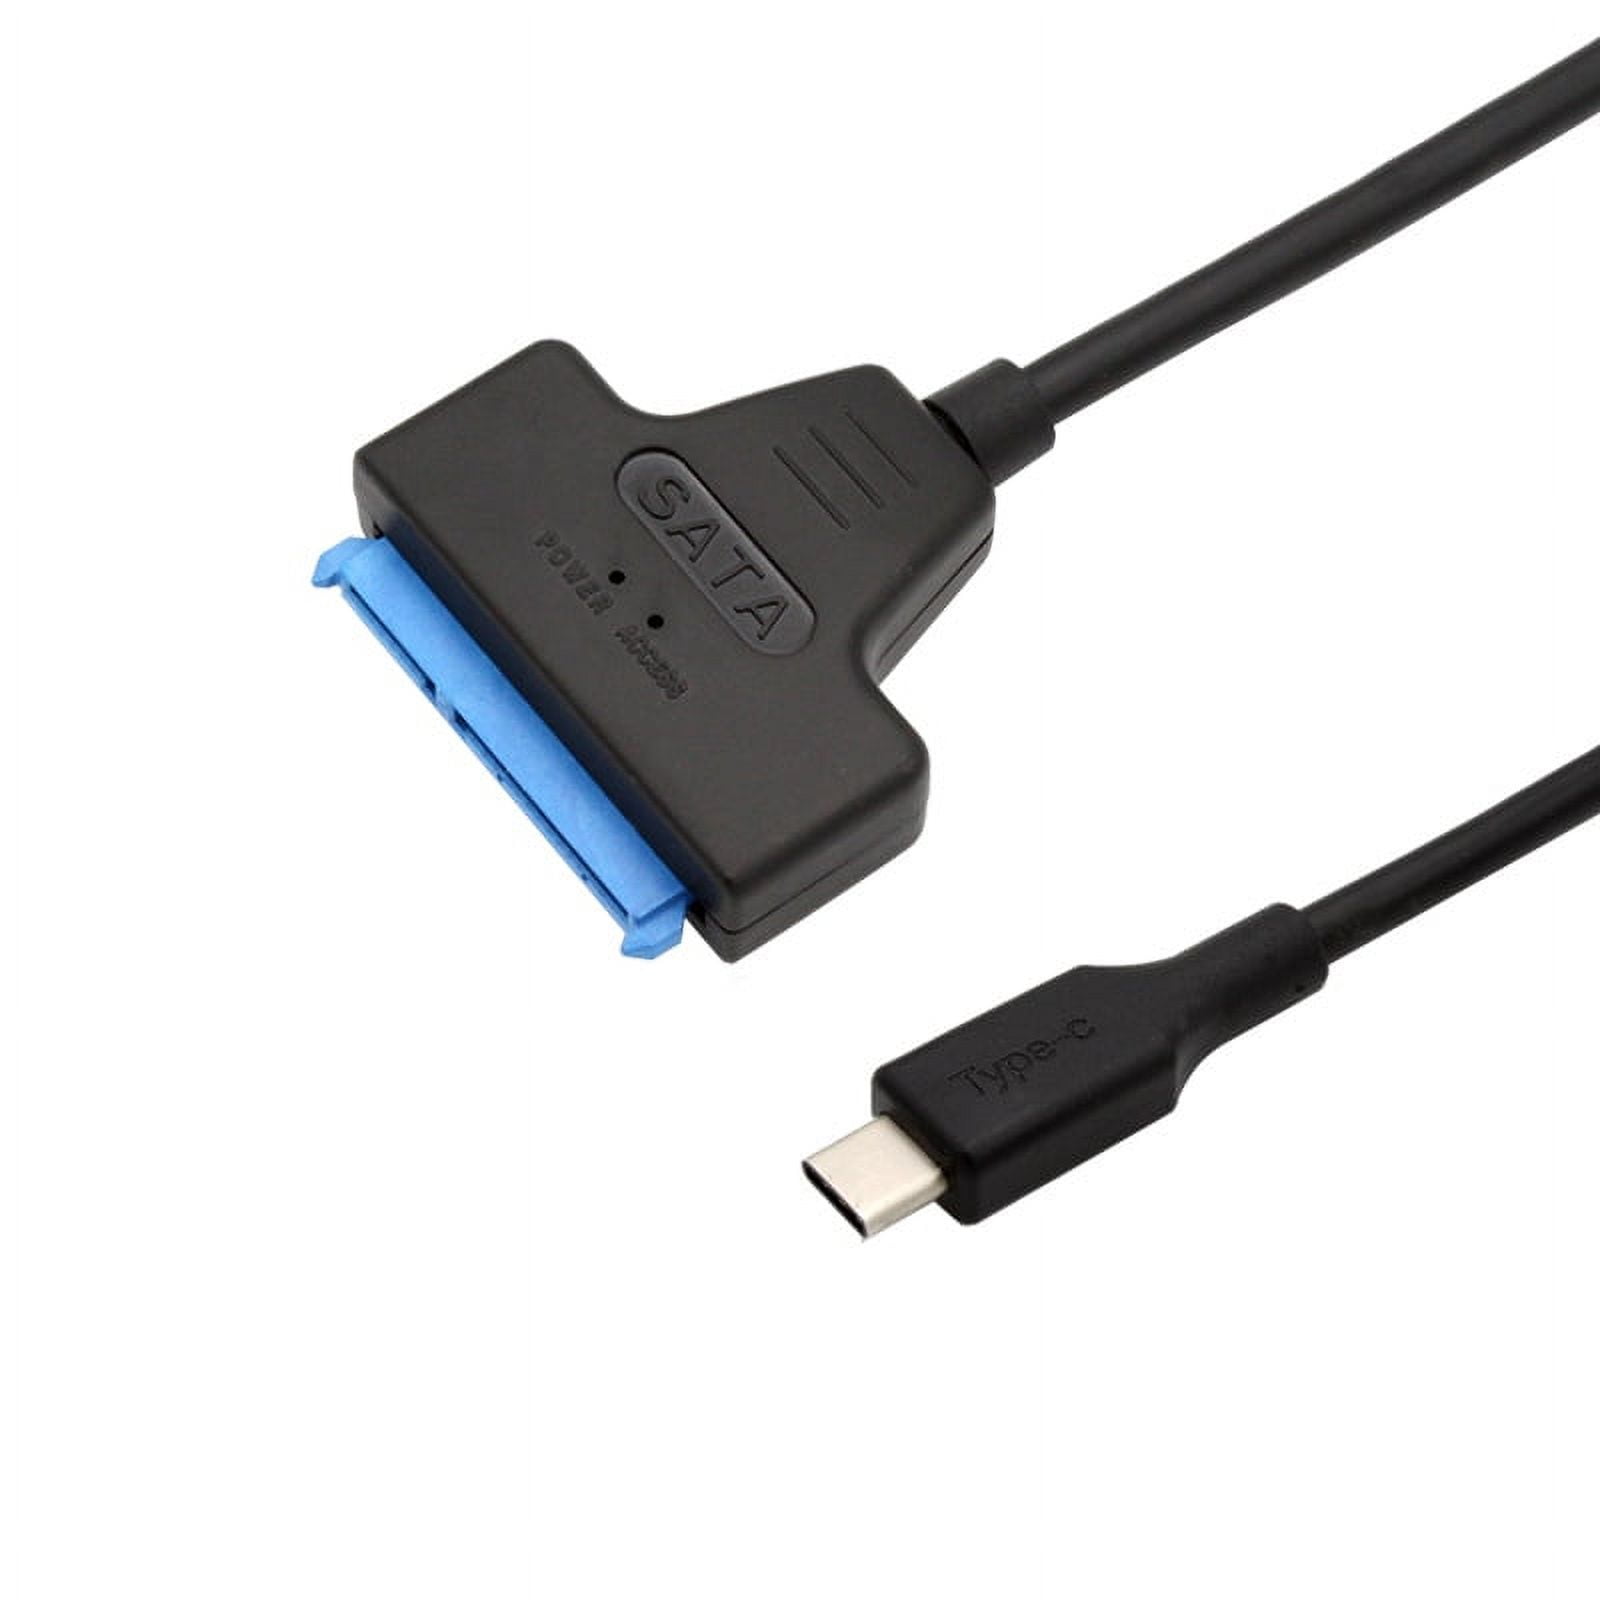 USB C to SATA Adapter - External Hard Drive Connector for 2.5'' SATA Drives  - SATA SSD / HDD to USB C Cable (USB31CSAT3CB) Black 